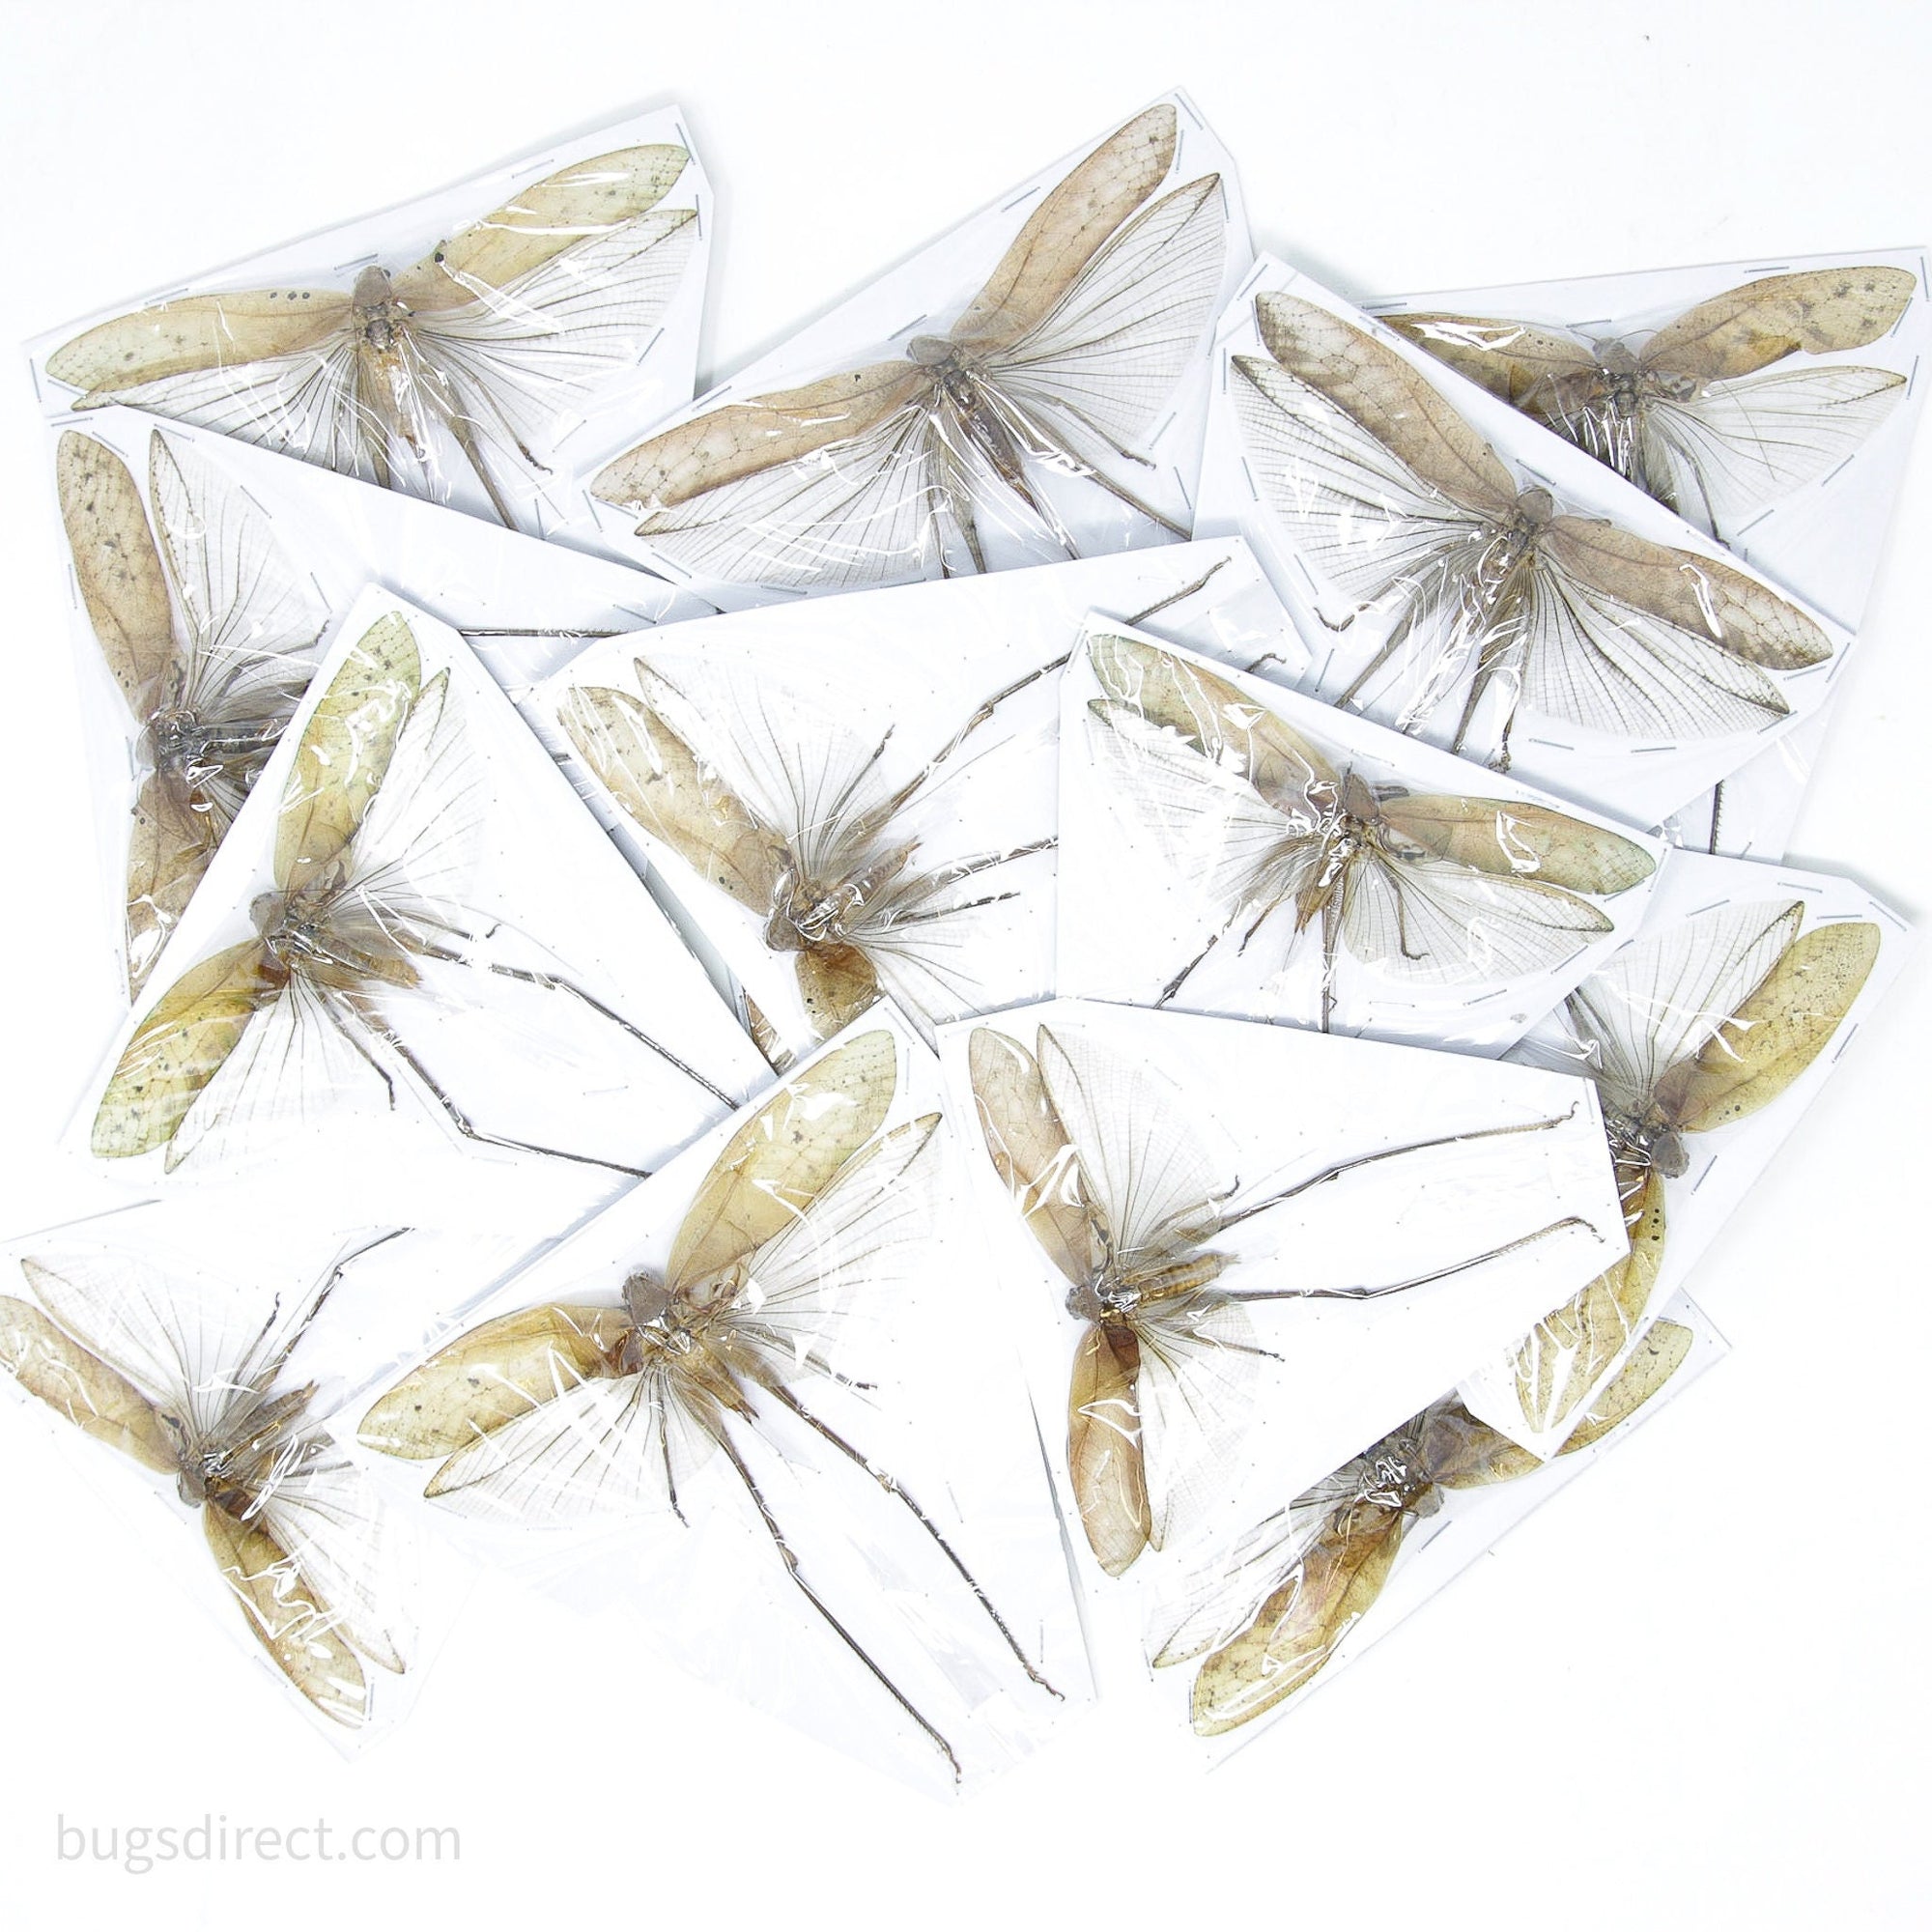 Pack of 10 Large Bush Katydids 5" Wingspan, Spread Specimens Grasshoppers, Crickets, Locust, A1 Entomology